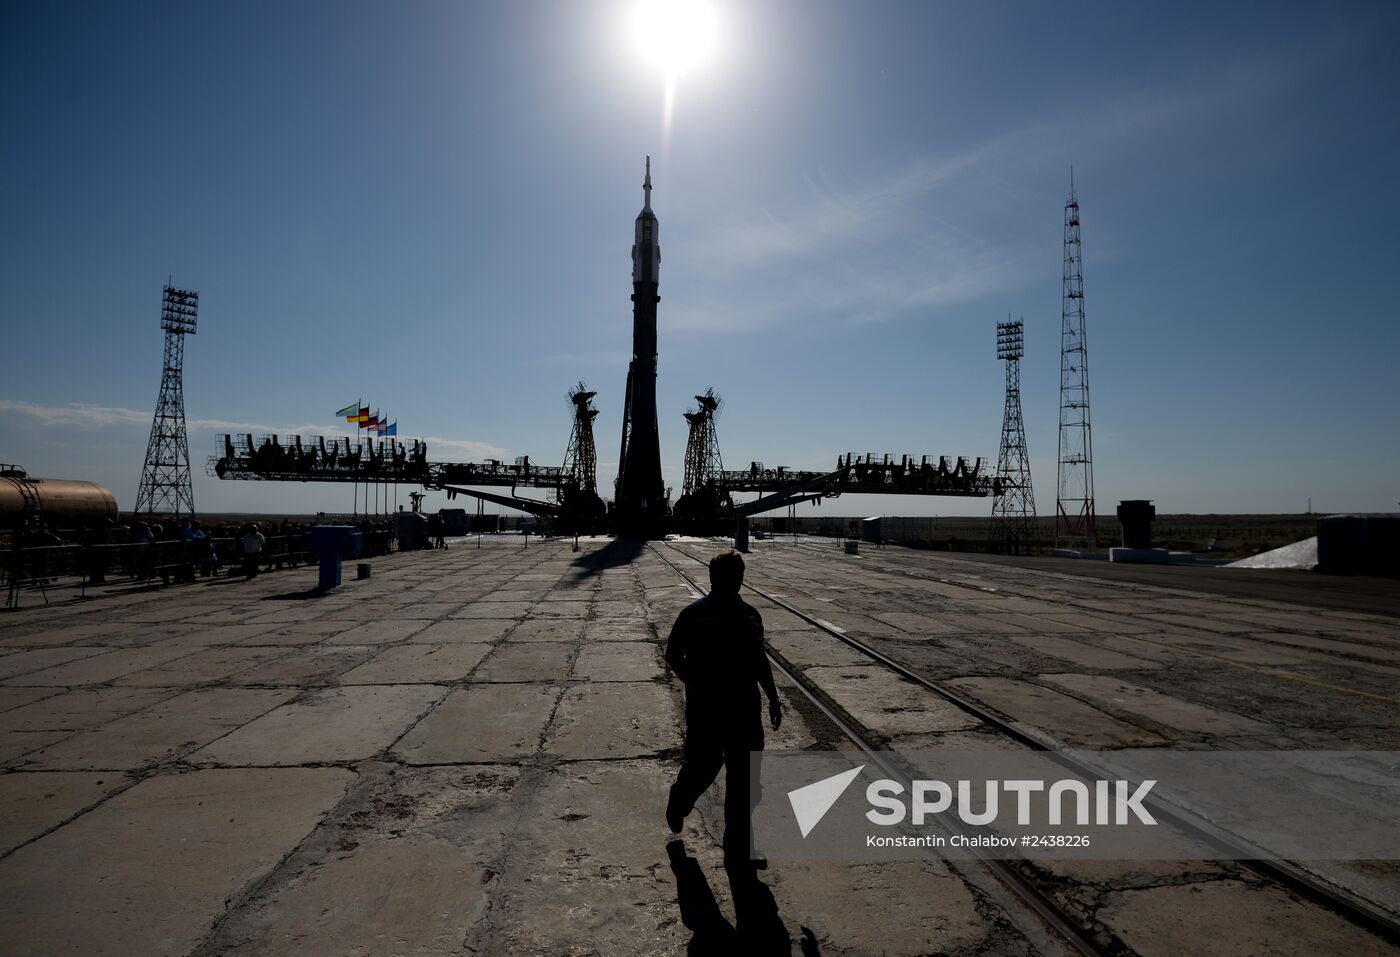 Soyuz-FG rocket with Soyuz TMA-13M spacecraft moved to Baikonur launch pad